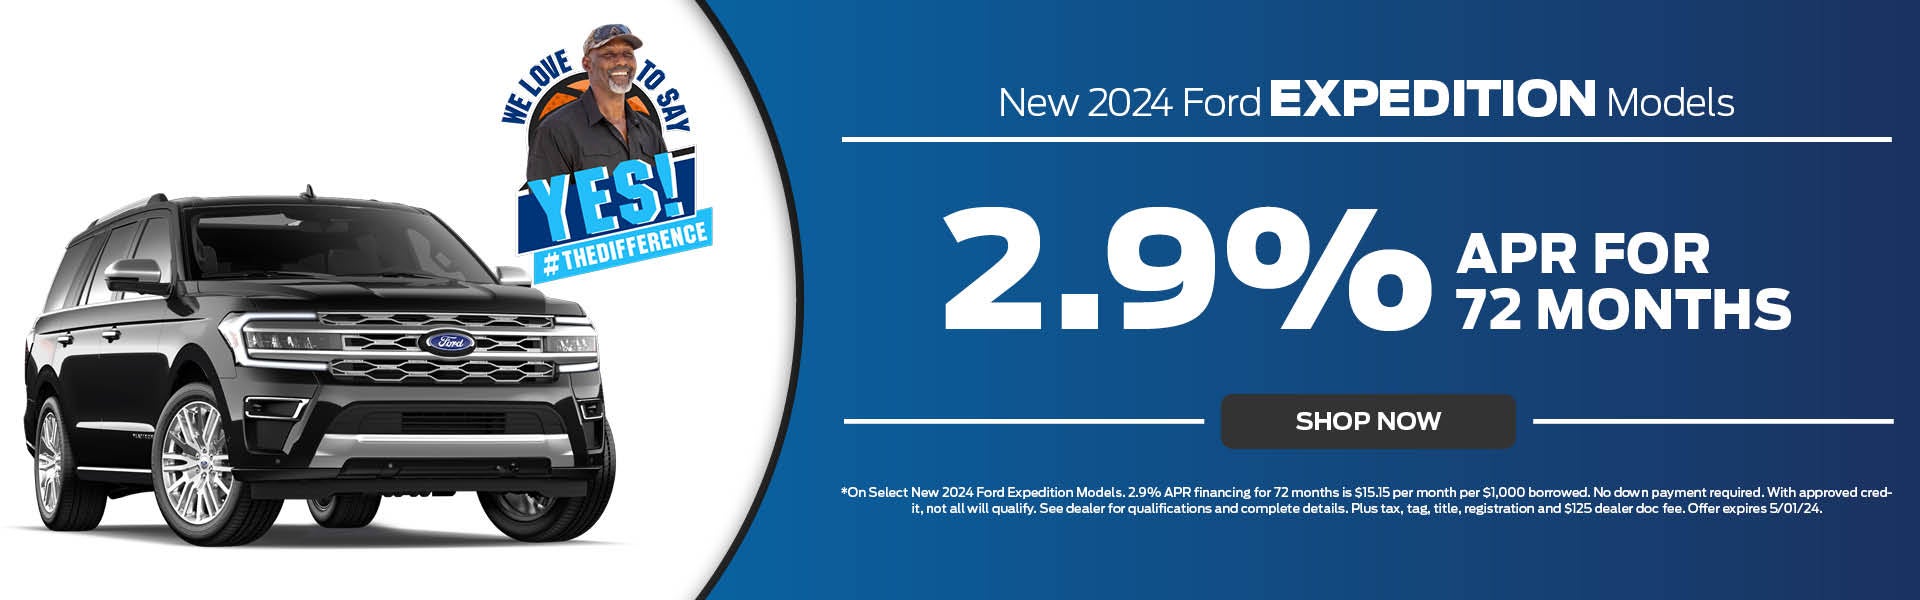 New 2024 Ford Expedition Models in El Dorado AR 